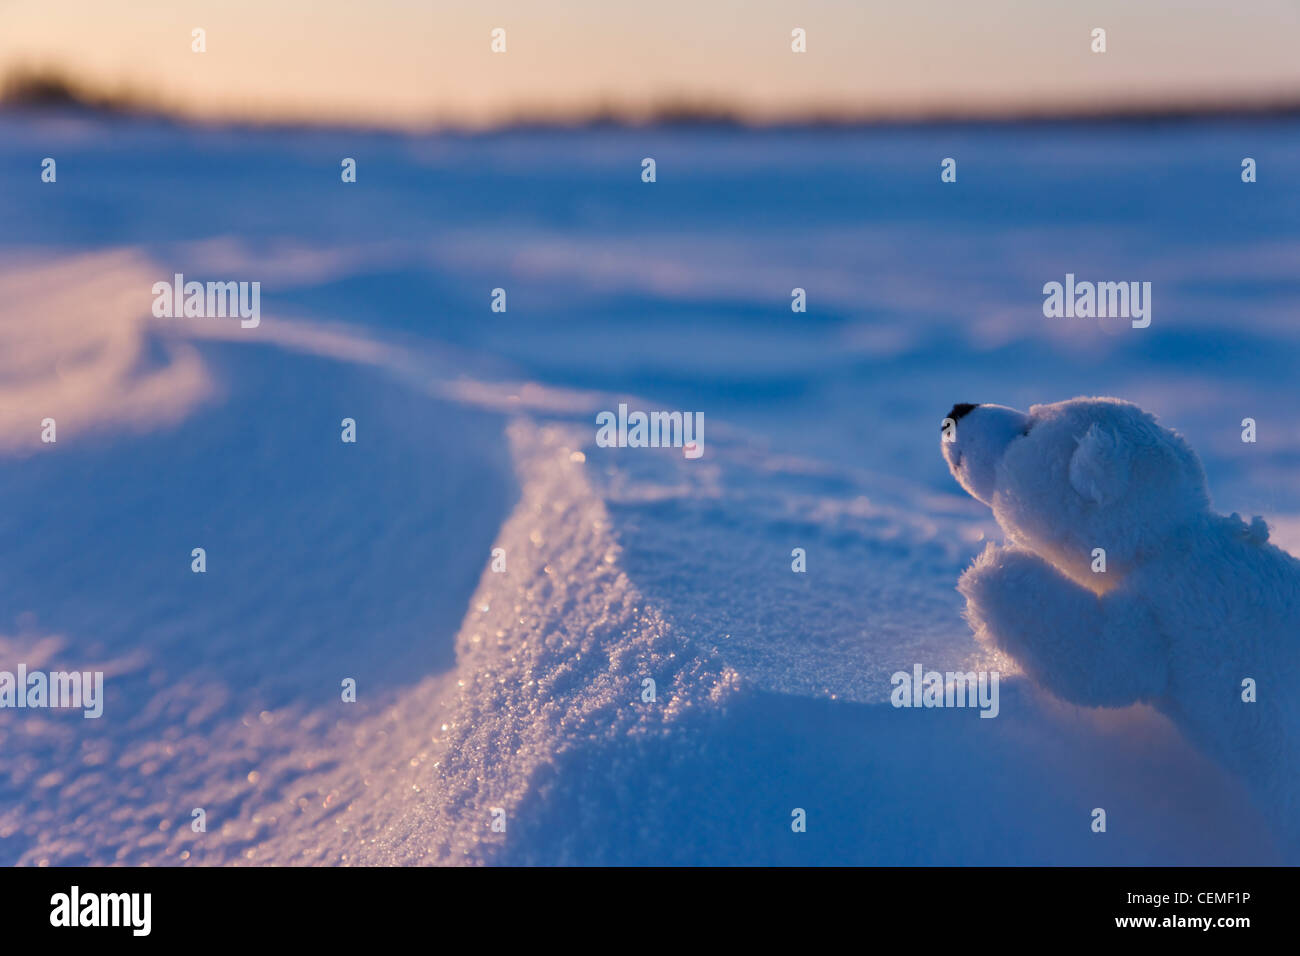 Stuffed toy of polar bear on snow, Manitoba, Canada Stock Photo